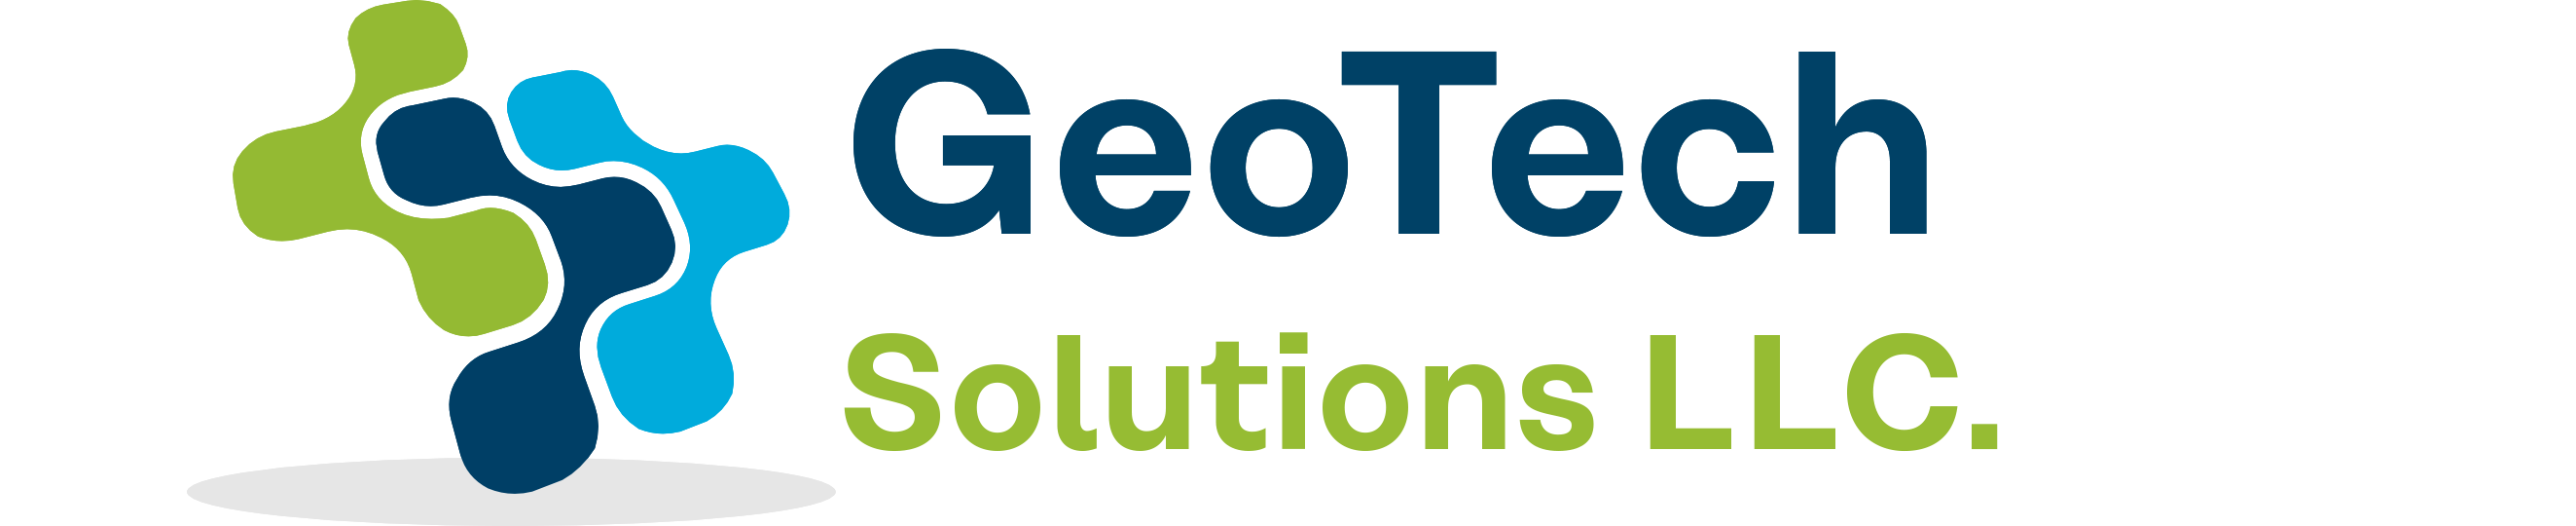 Geotech Solutions, LLC